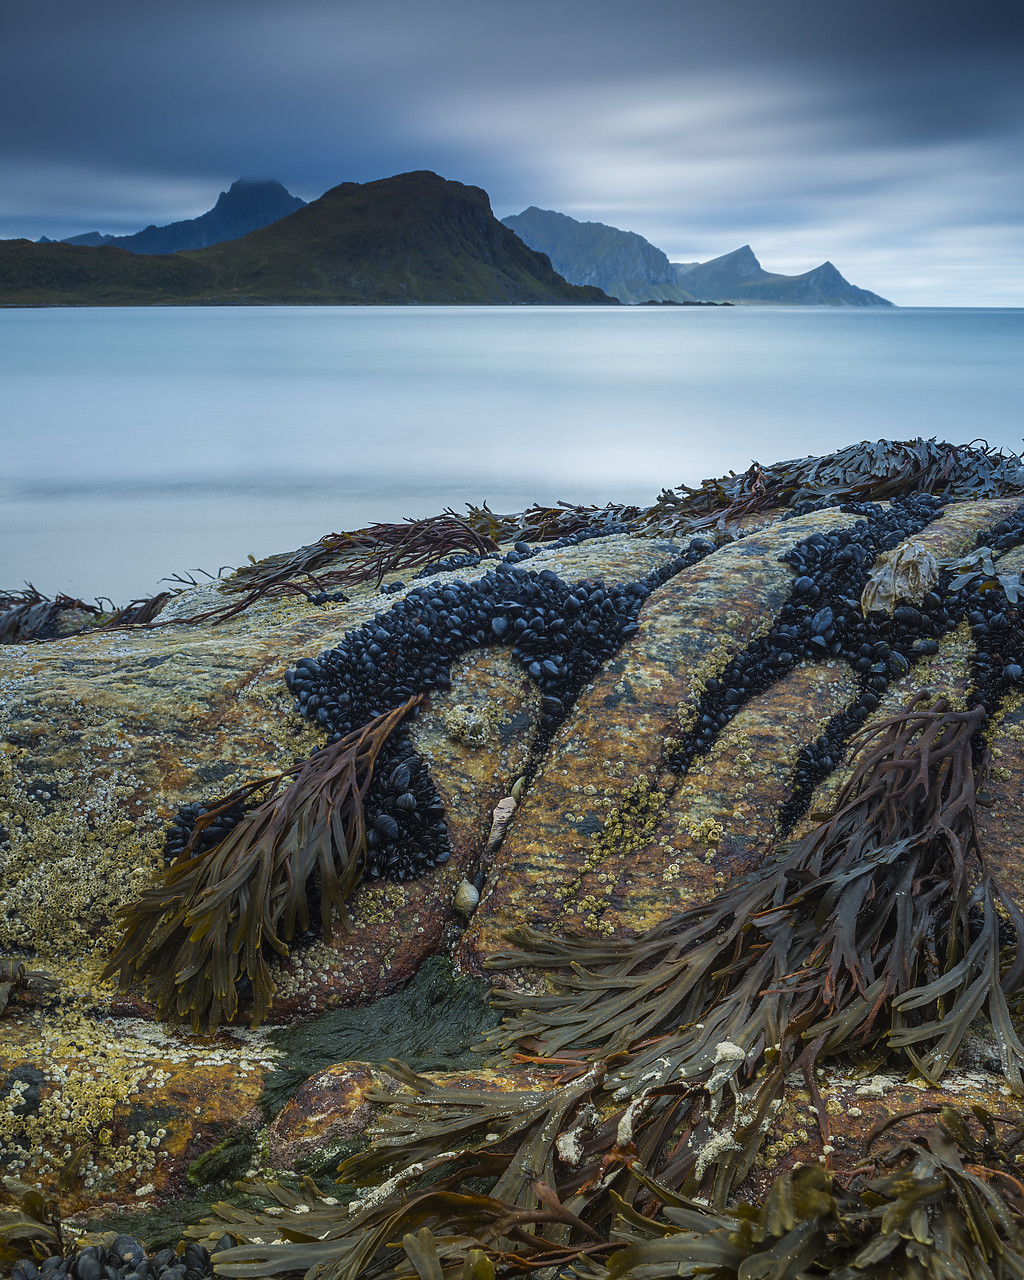 #130302-2 - Bladderwrack & Mussels on Haukland Beach, Lofoten Islands, Norway